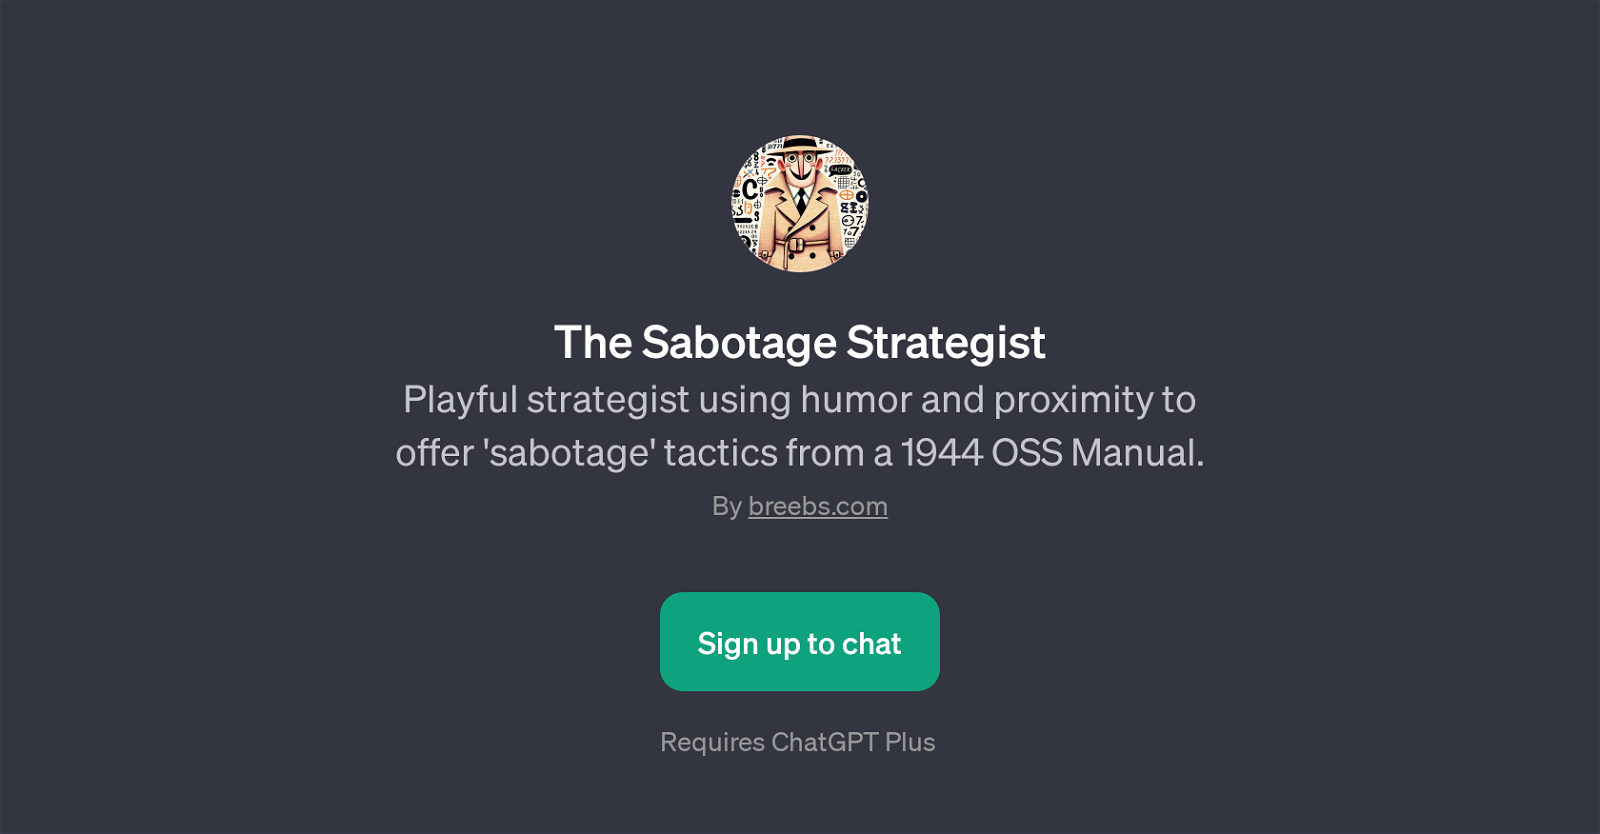 The Sabotage Strategist website